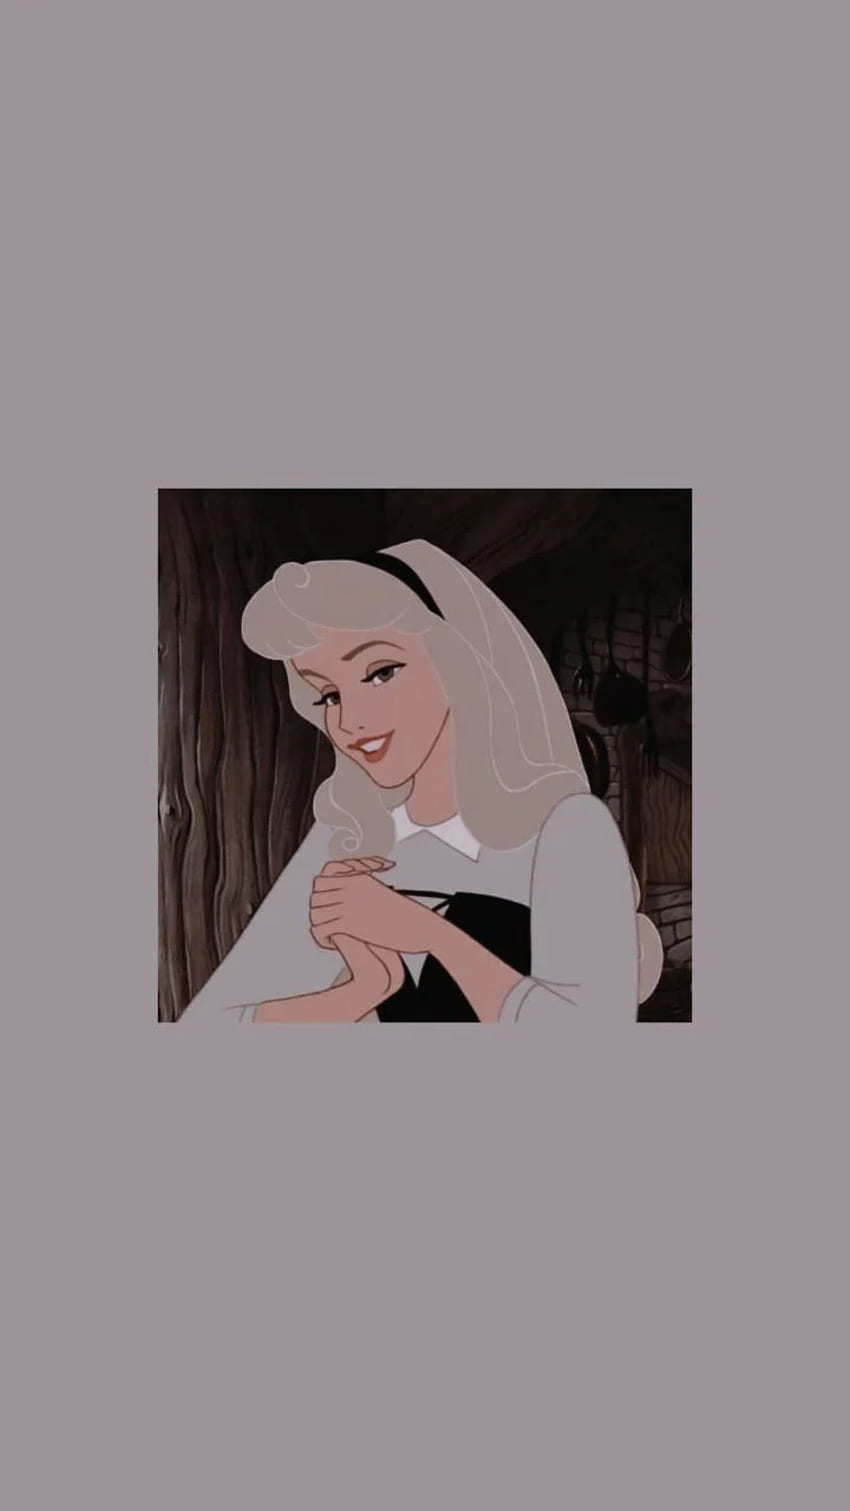 The disney princess with long blonde hair - Princess